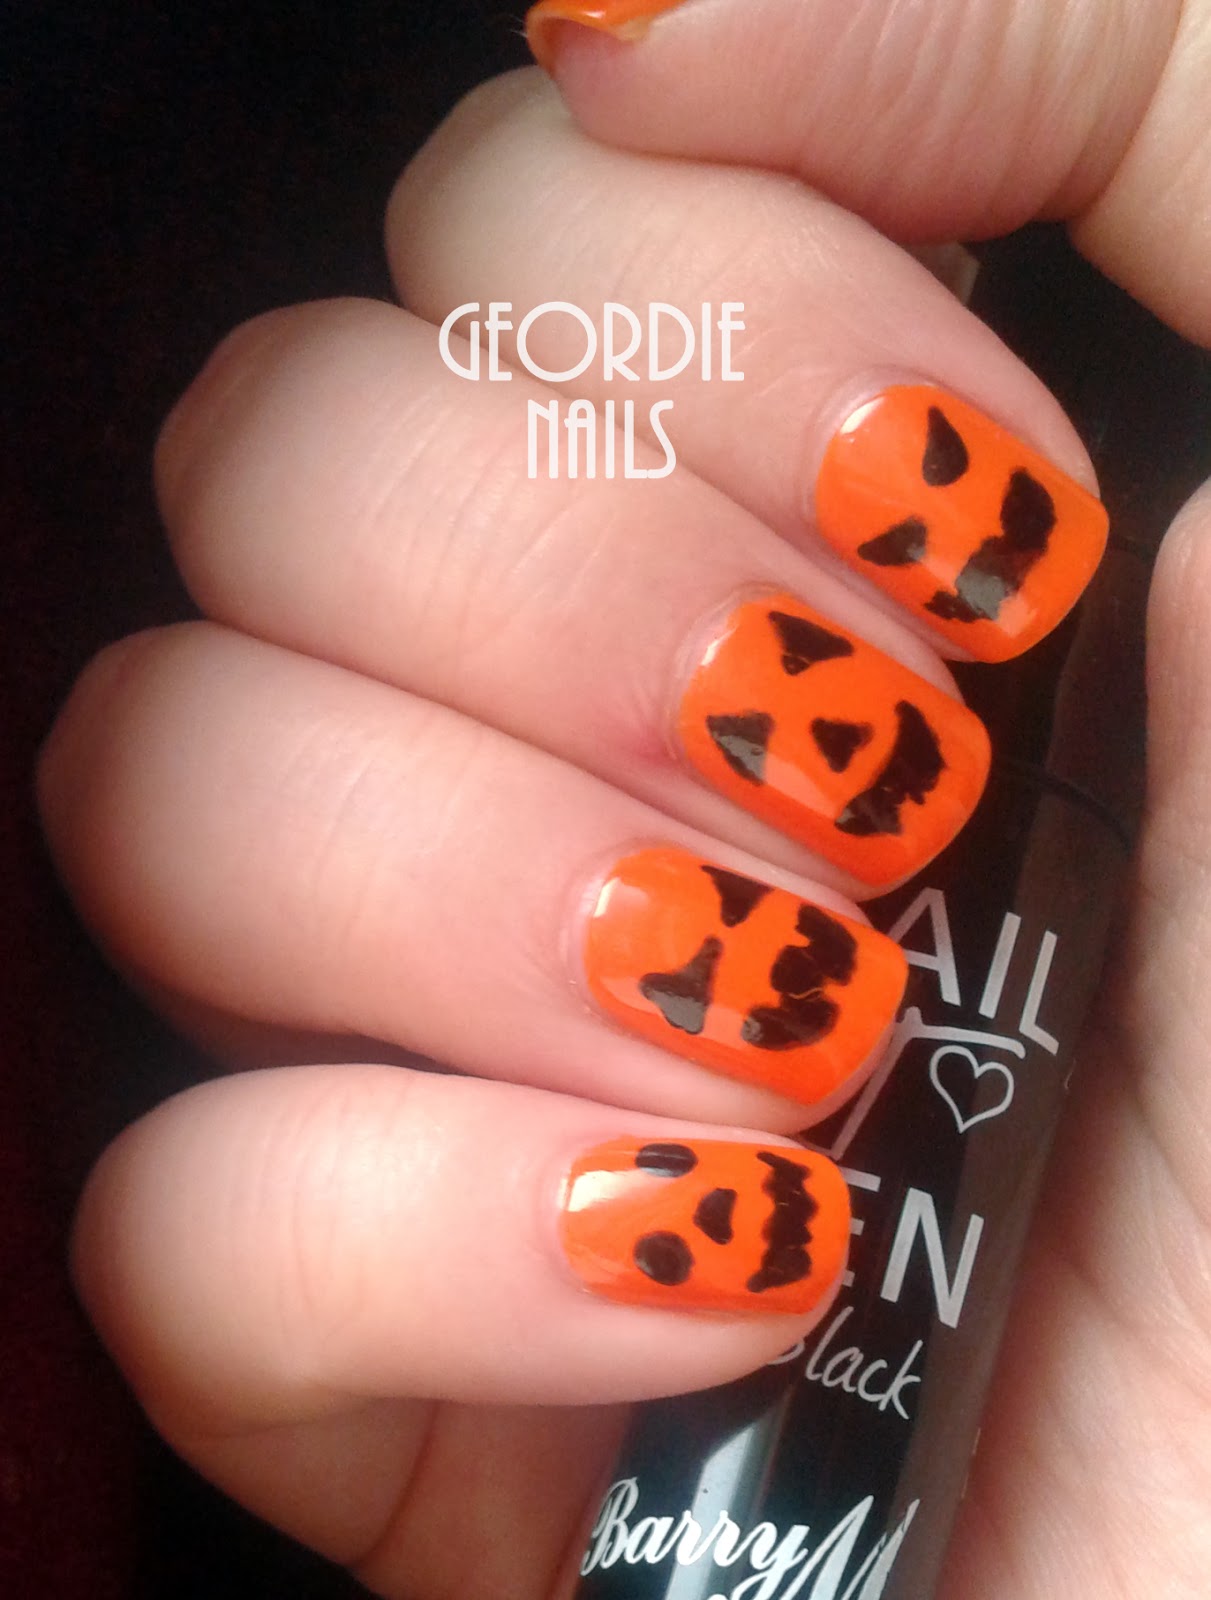 Geordie Nails: Halloween Pumpkin Manicure